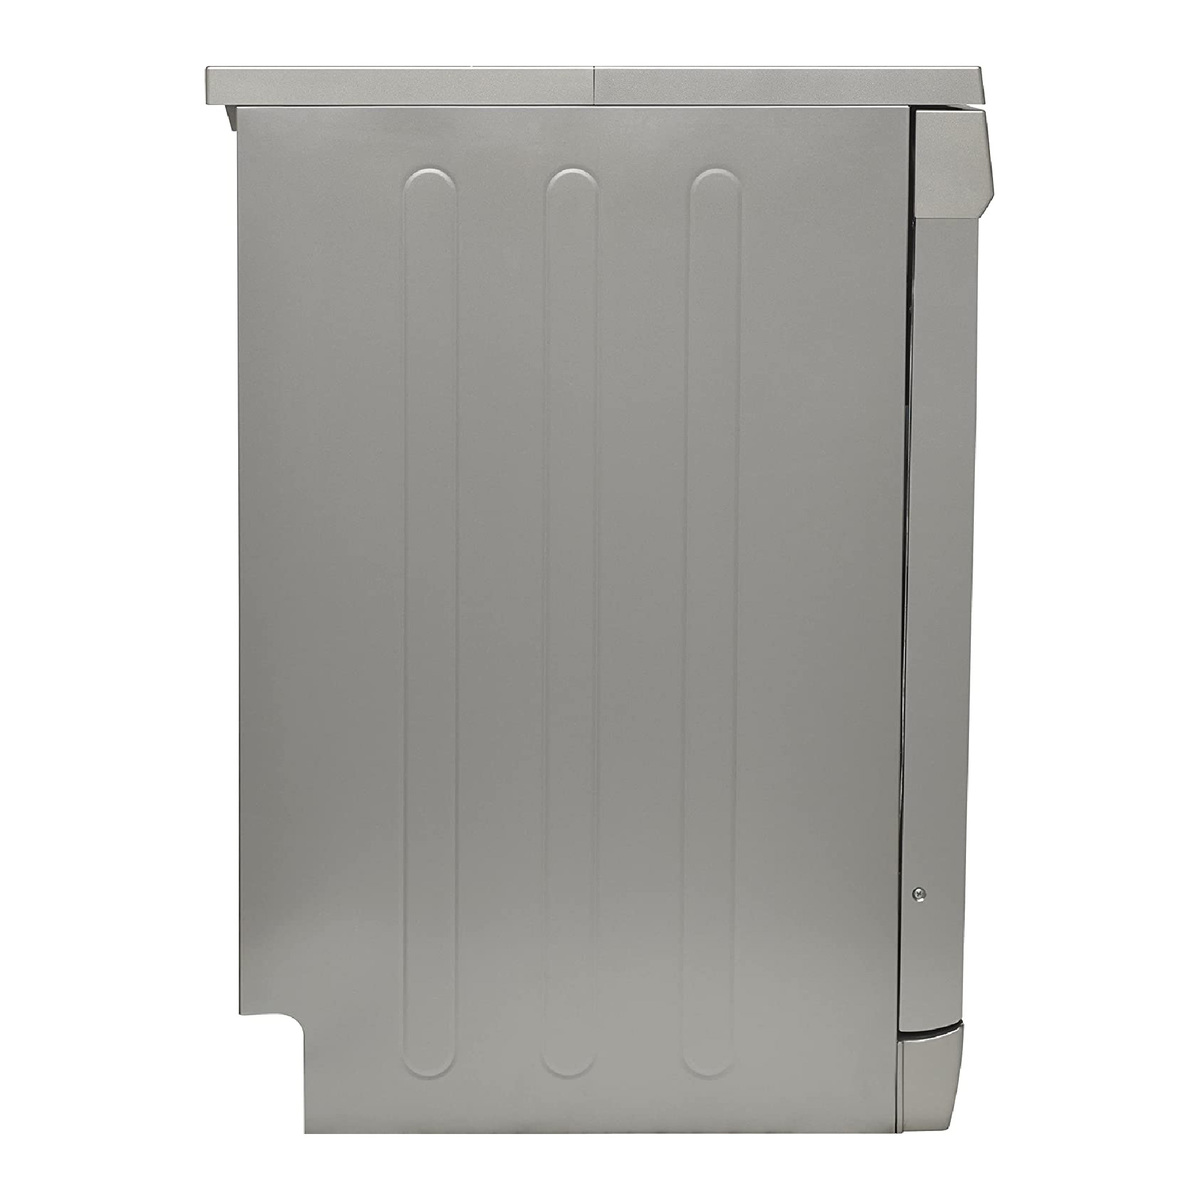 Terim Freestanding Dishwasher With 15 Place Settings, 60 cm, Silver, TERDW1506VS